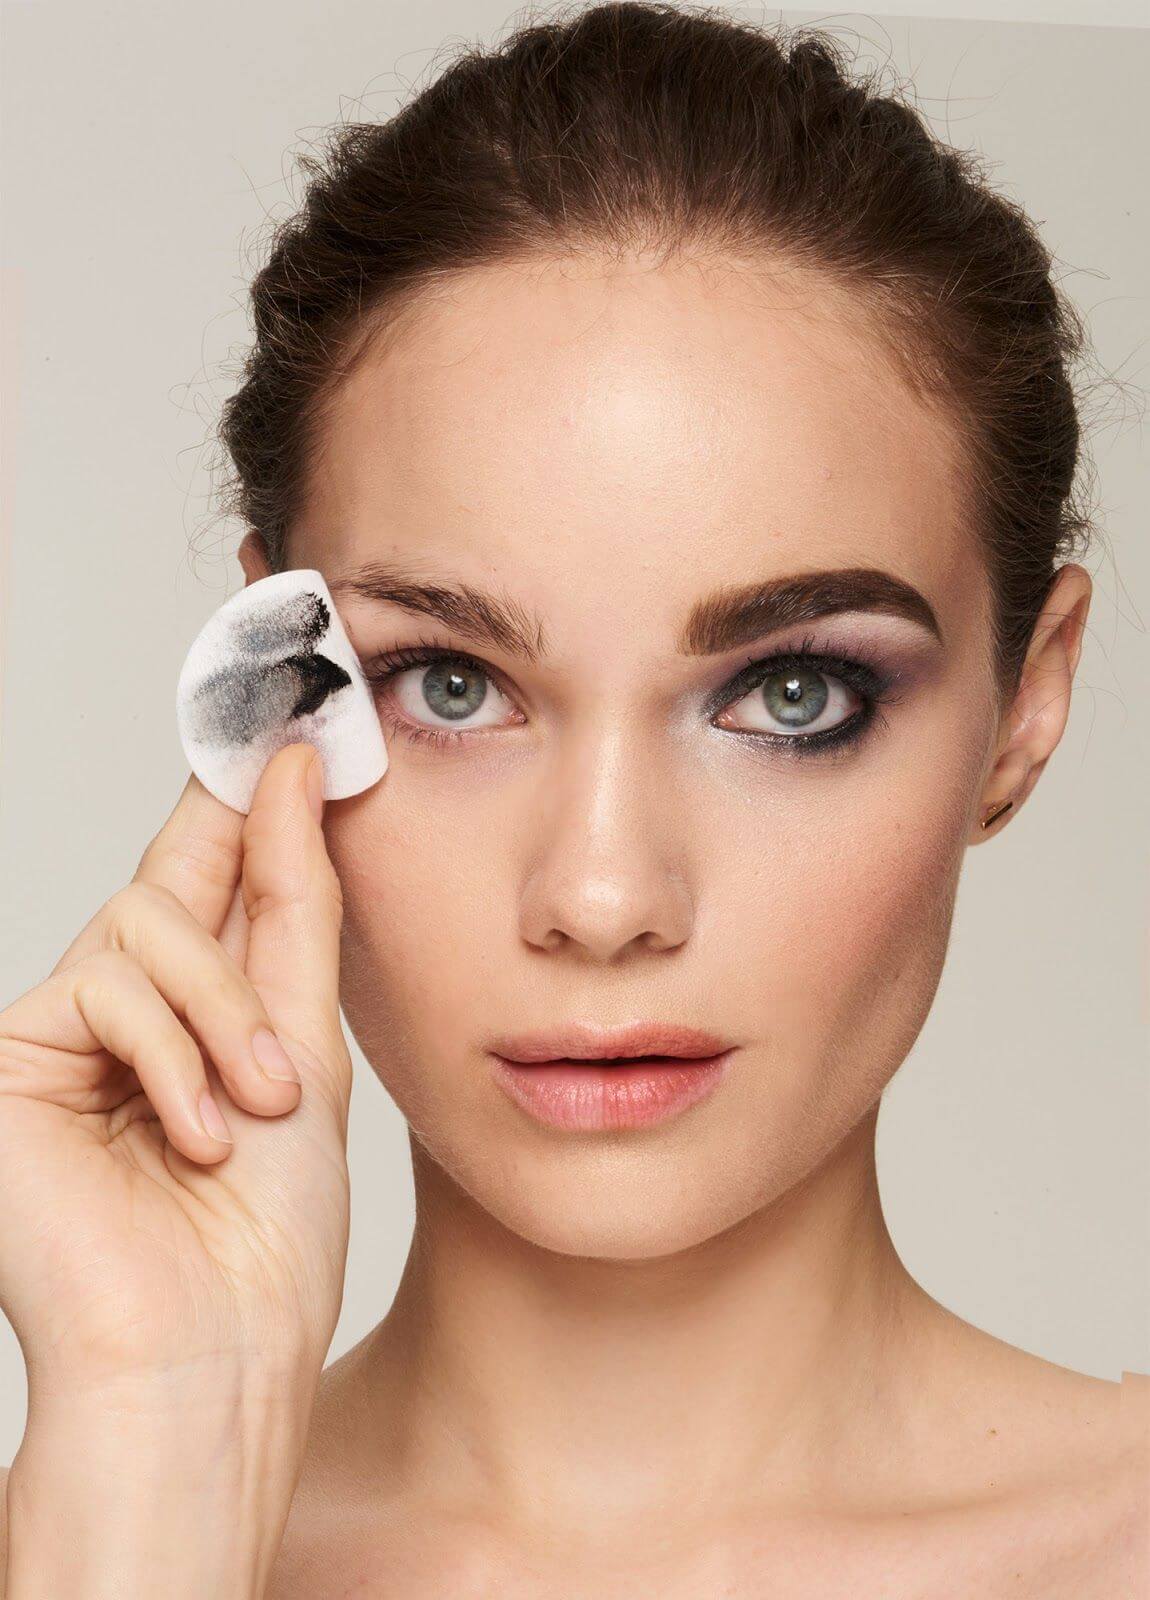 Clinique Rinse-Off Eye Makeup Solvent 60 ml ผลิตภัณฑ์ทำความสะอาดเครื่องสำอางชนิด oil free ไม่ระคายเคืองต่อผิวตา เป็นทางเลือกที่เหมาะใช้กับคนที่ใส่คอนแทคเลนส์ และเมคอัพแบบเบาๆ แค่ปาดออกเบาๆครั้งเดียวก็สะอาดแล้ว ใช้ล้างคราบลิปสติกได้ง่ายด้วย ไม่ระคายเคือง ไม่ทำให้แสบตาหรือแสบปาก